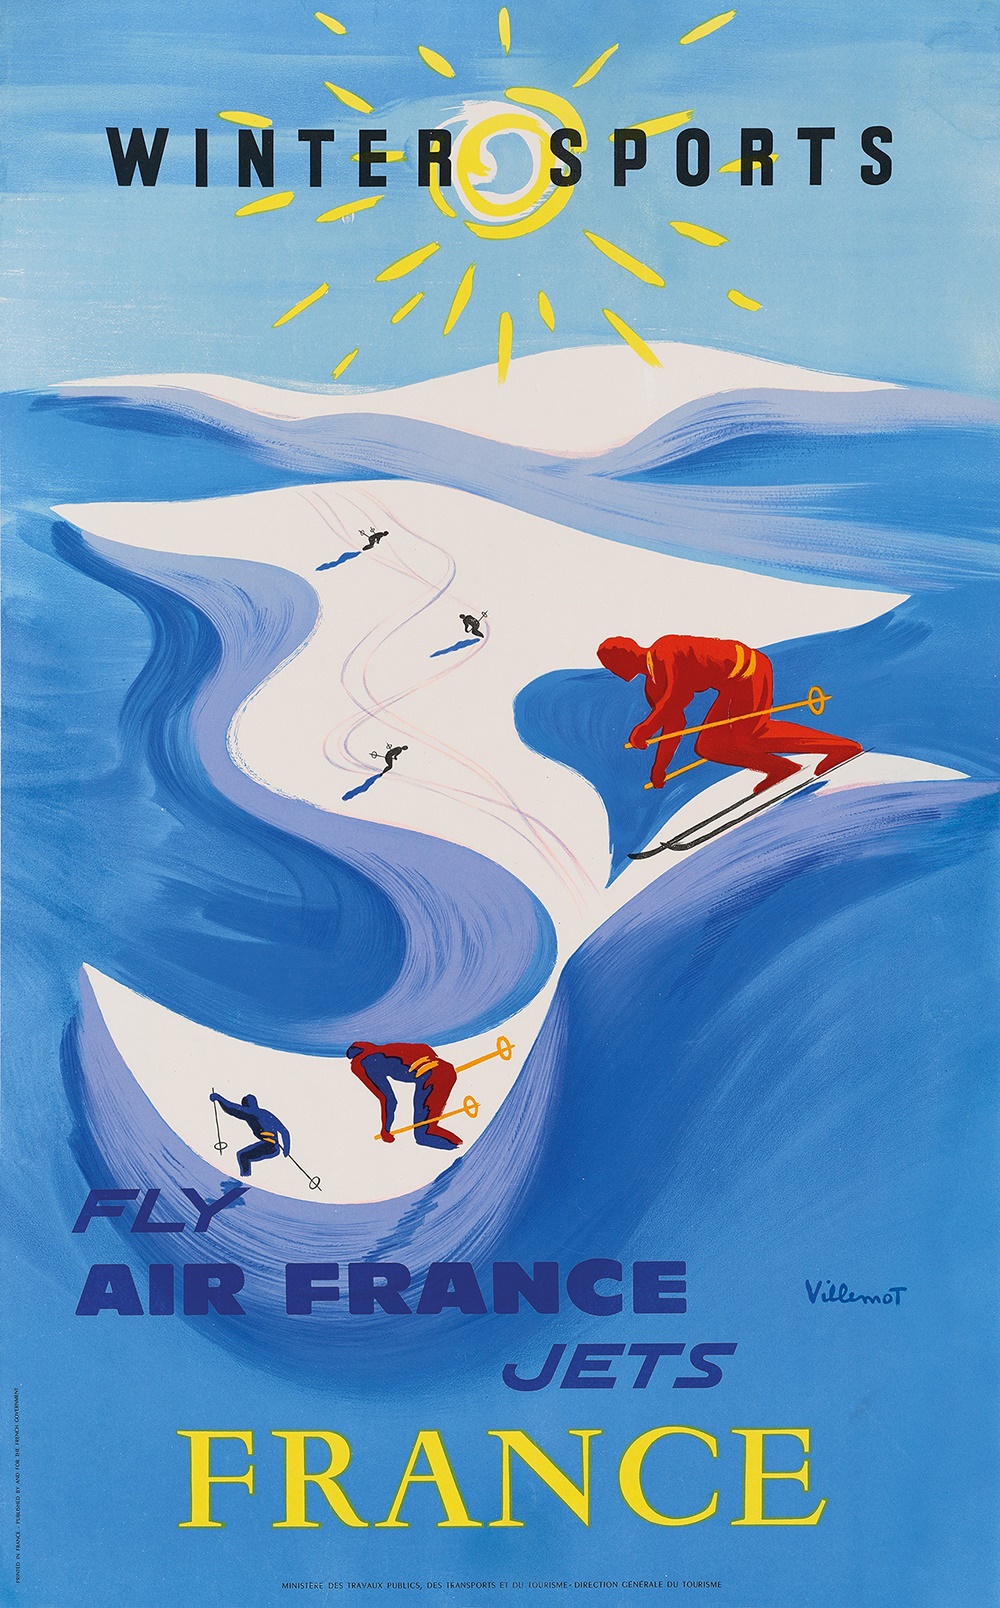 LOT 44 | BERNARD VILLEMOT (1911-1989) WINTER SPORTS, FRANCE, FLY AIR FRANCE JETS